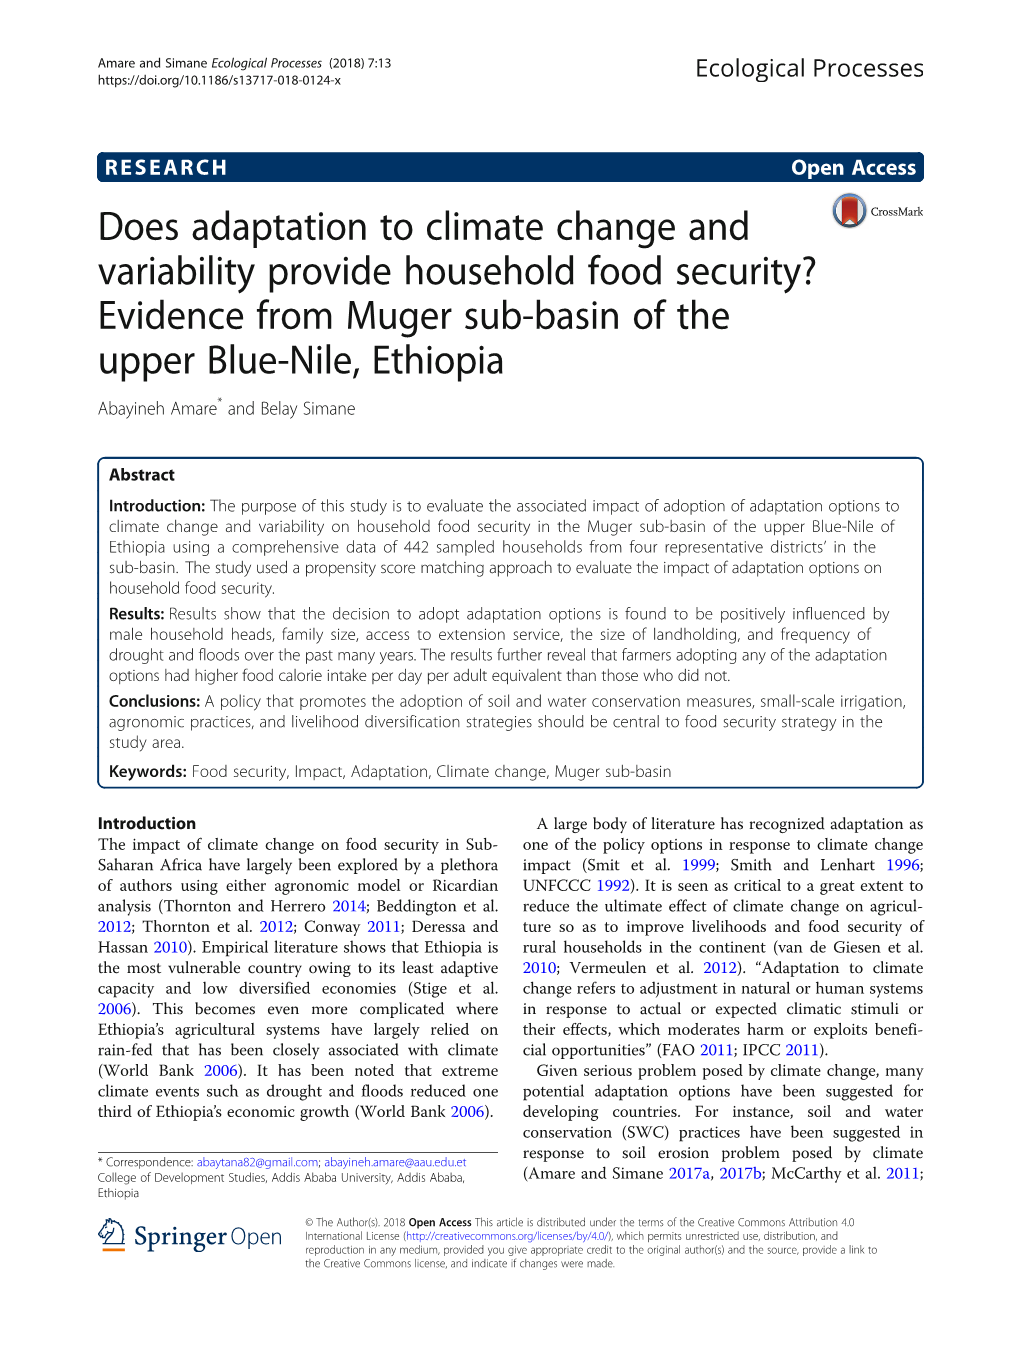 Evidence from Muger Sub-Basin of the Upper Blue-Nile, Ethiopia Abayineh Amare* and Belay Simane